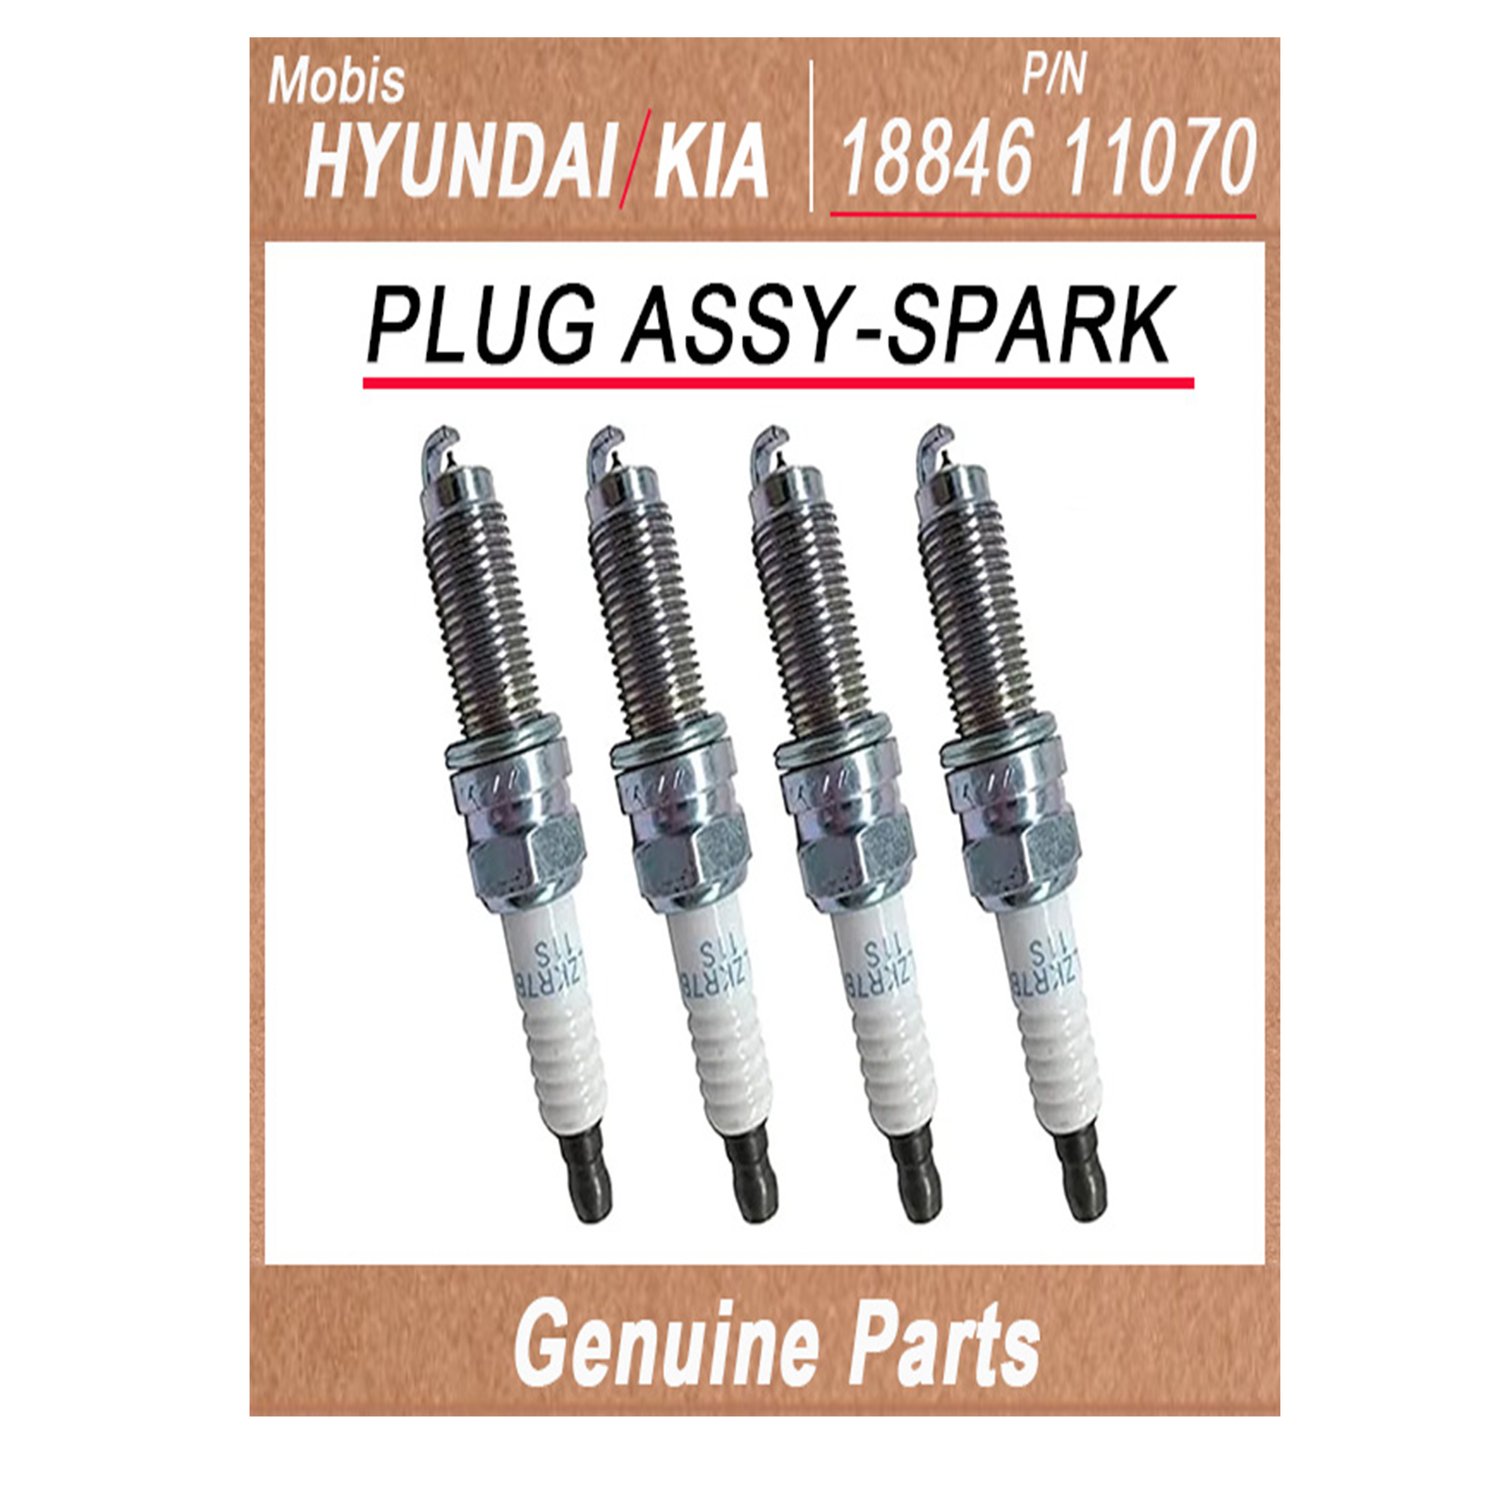 1884611070 _ PLUG ASSY_SPARK _ Genuine Korean Automotive Spare Parts _ Hyundai Kia _Mobis_